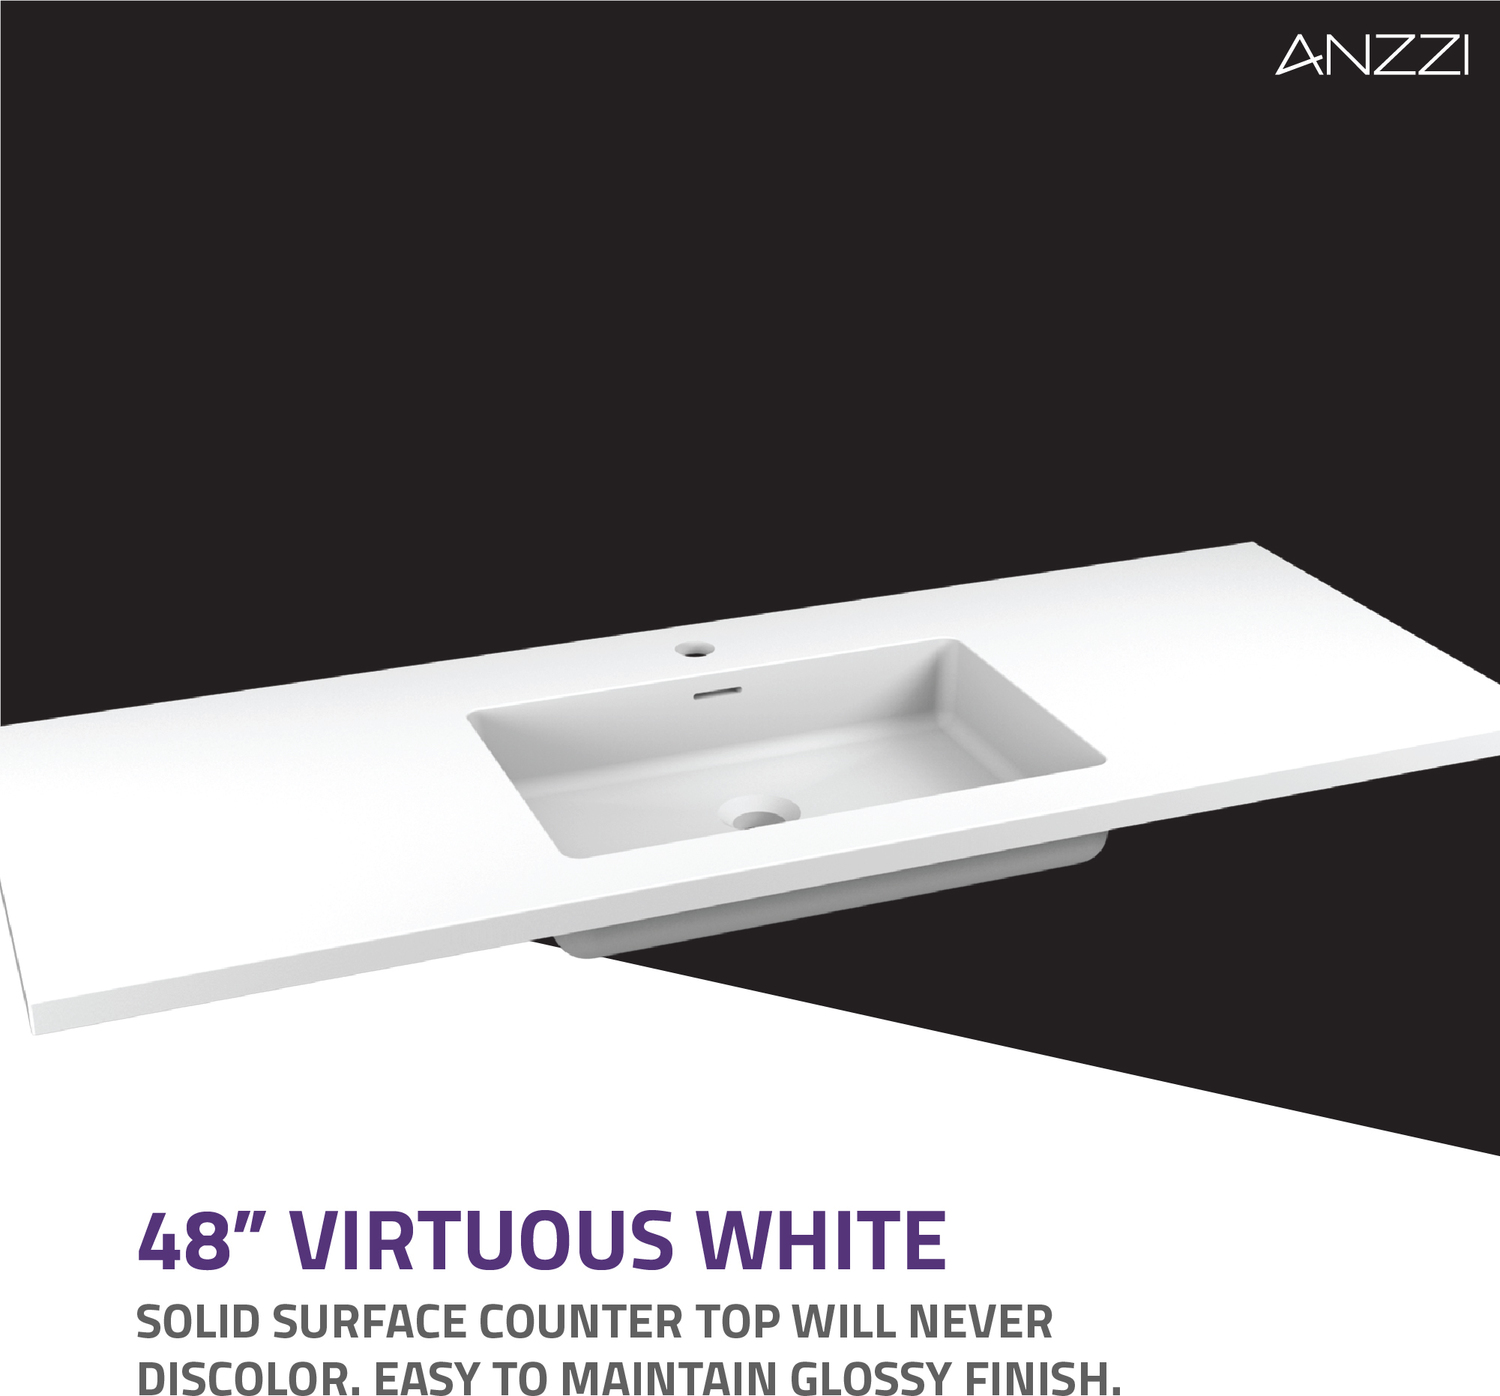 60 in floating vanity Anzzi BATHROOM - Vanities - Vanity Sets Gray